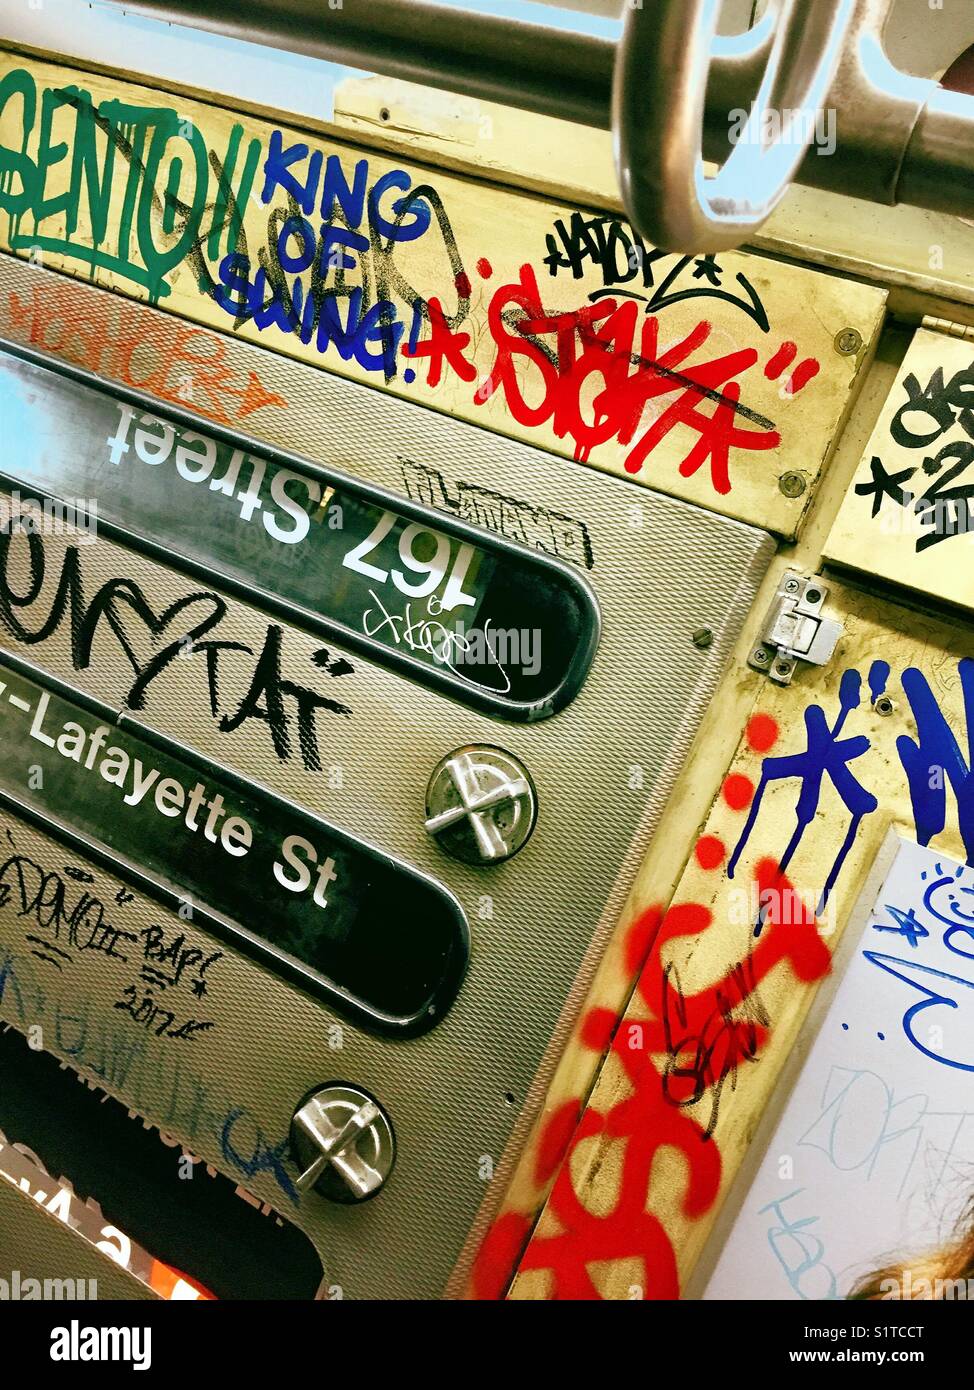 Graffiti in vintage subway car, New York City, USA Stock Photo